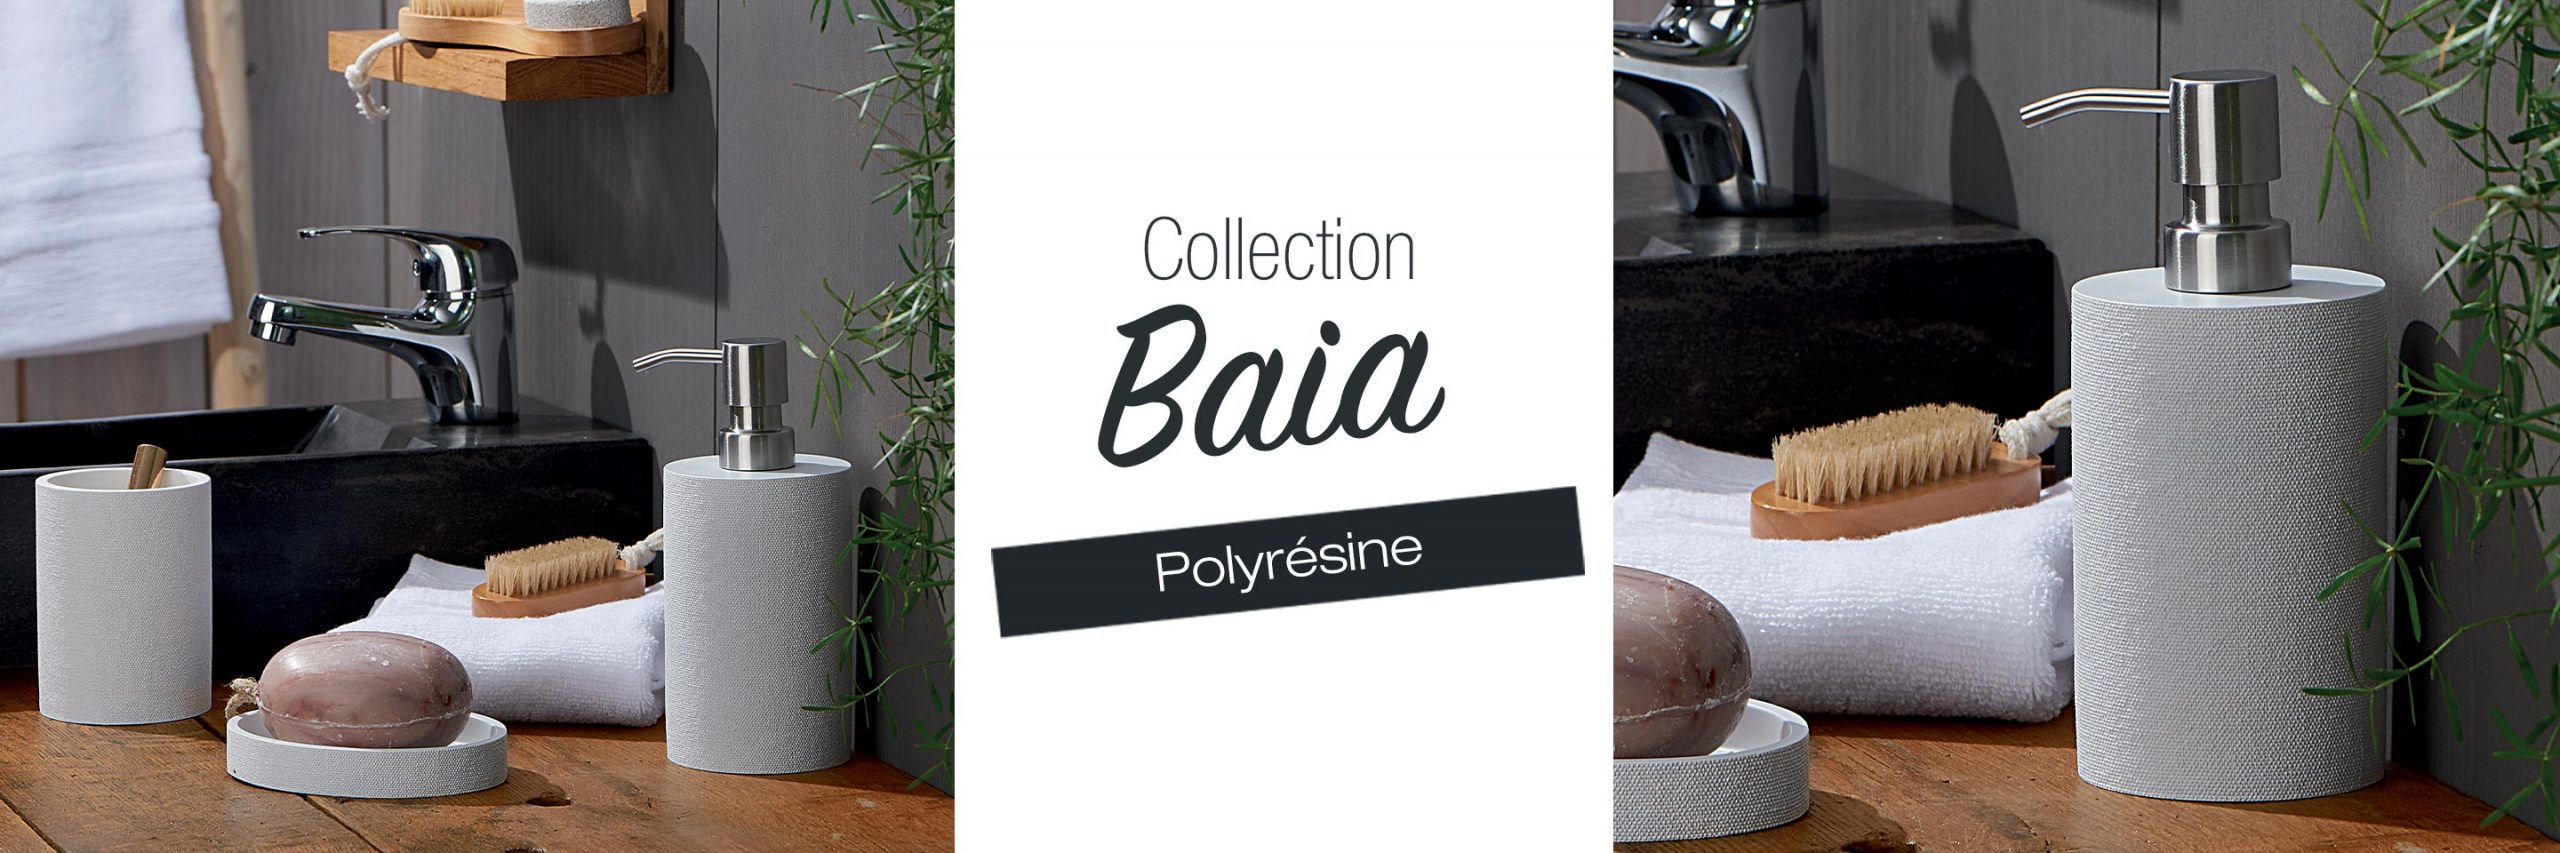 Collection BAIA polyrésine blanche